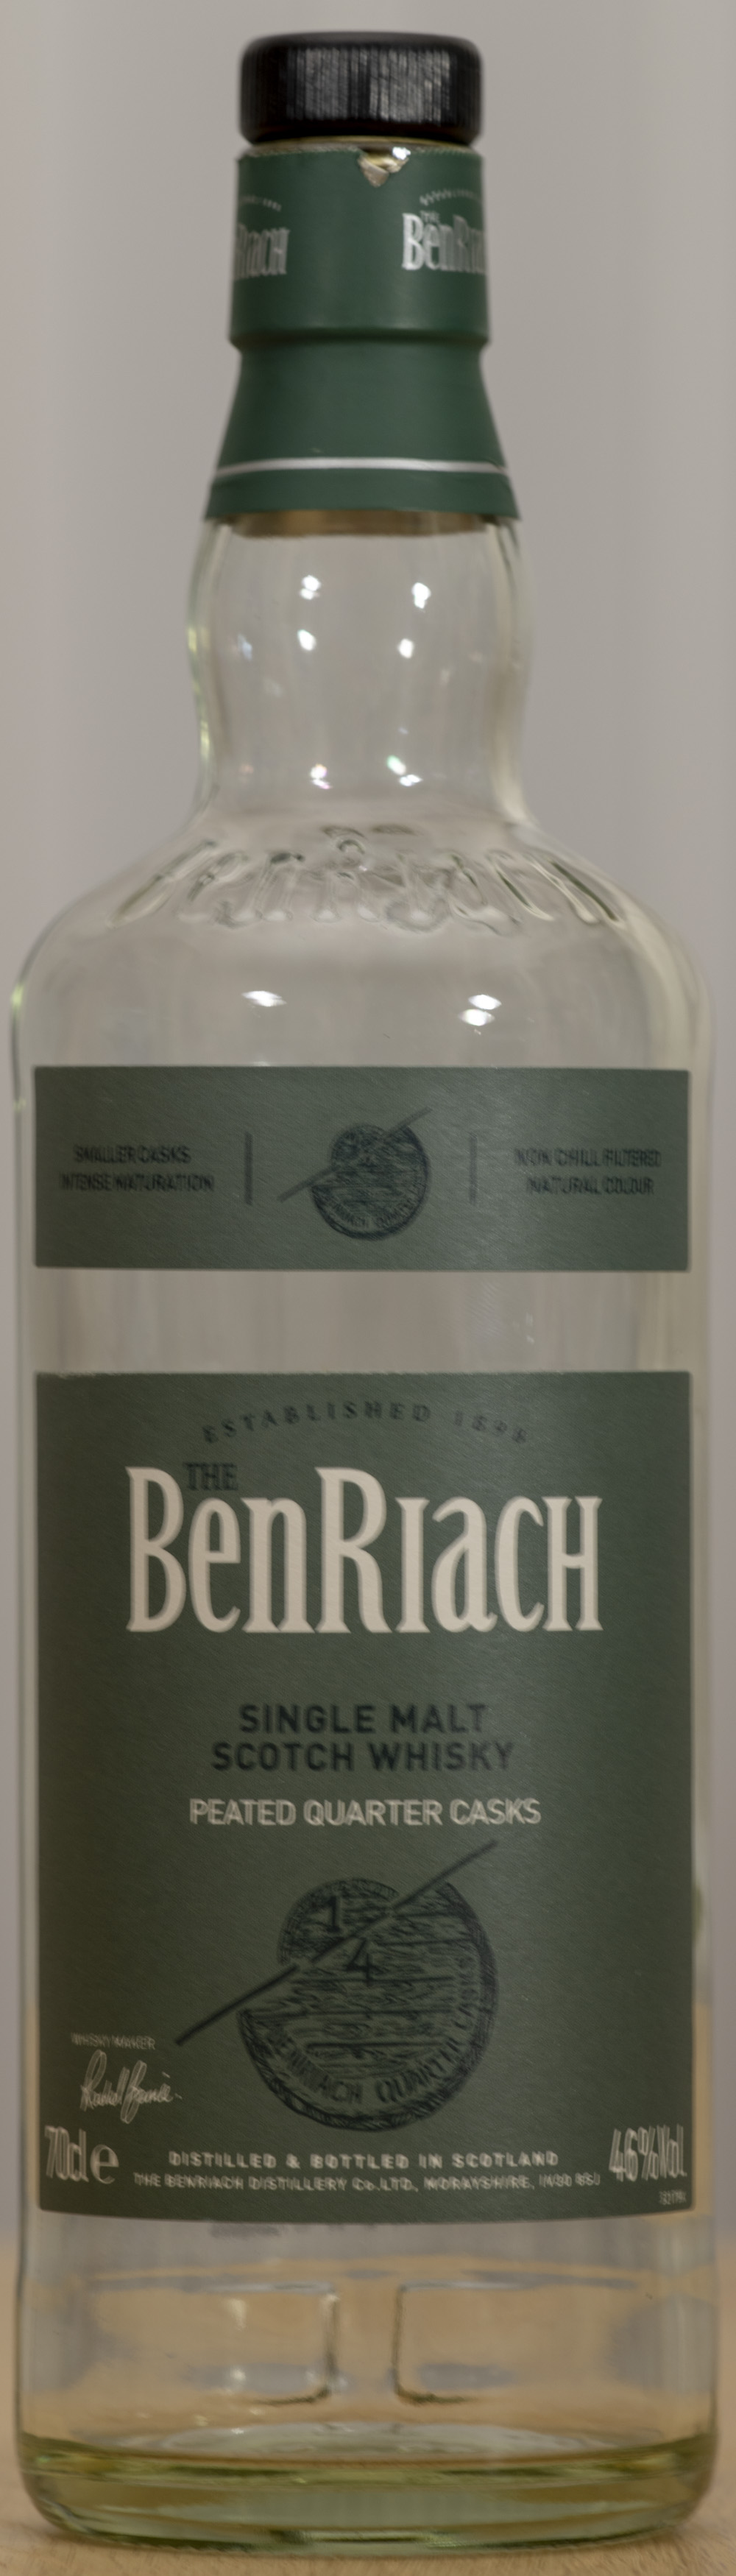 Billede: PHC_1578 - Benriach Peated Quarter Cask - bottle front.jpg